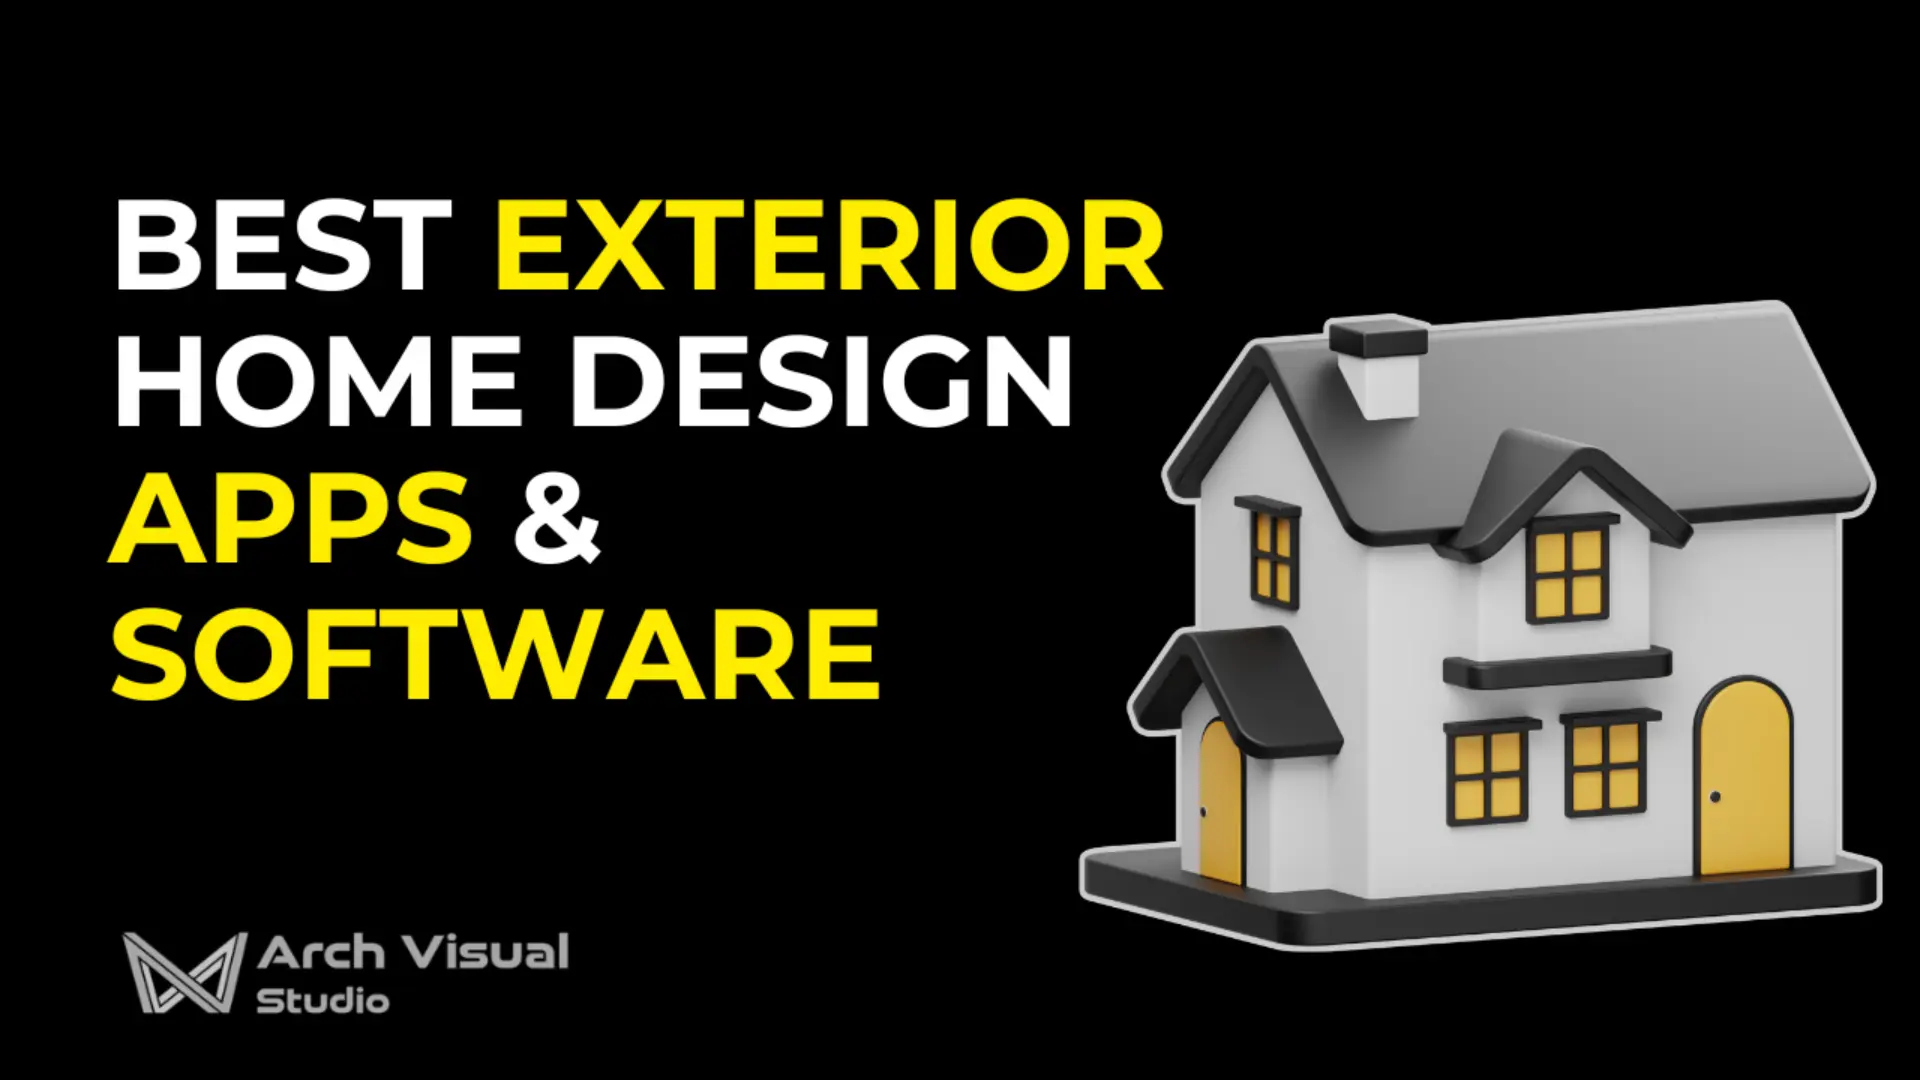 Best Exterior Home Design Apps & Software